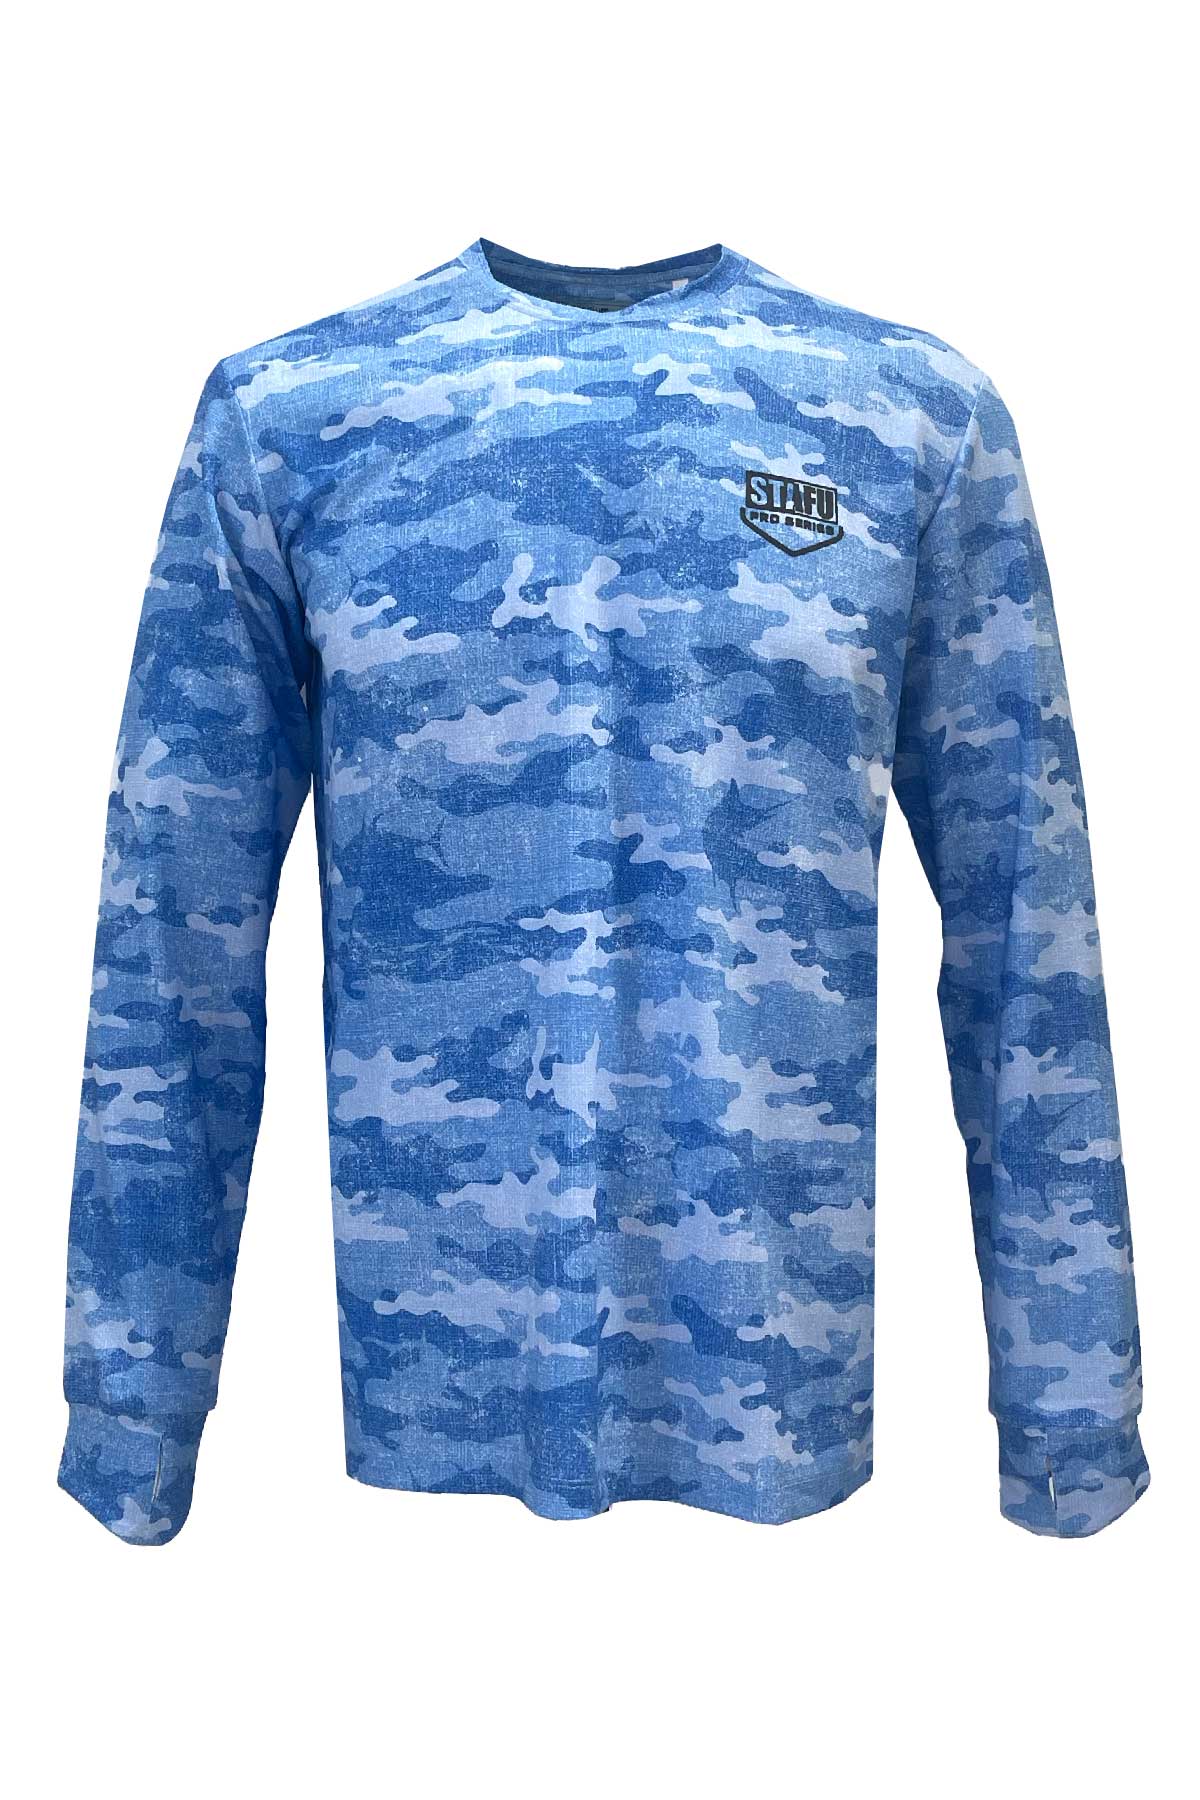 Apex v2 Long Sleeve Fishing Shirt - Camo - Blue